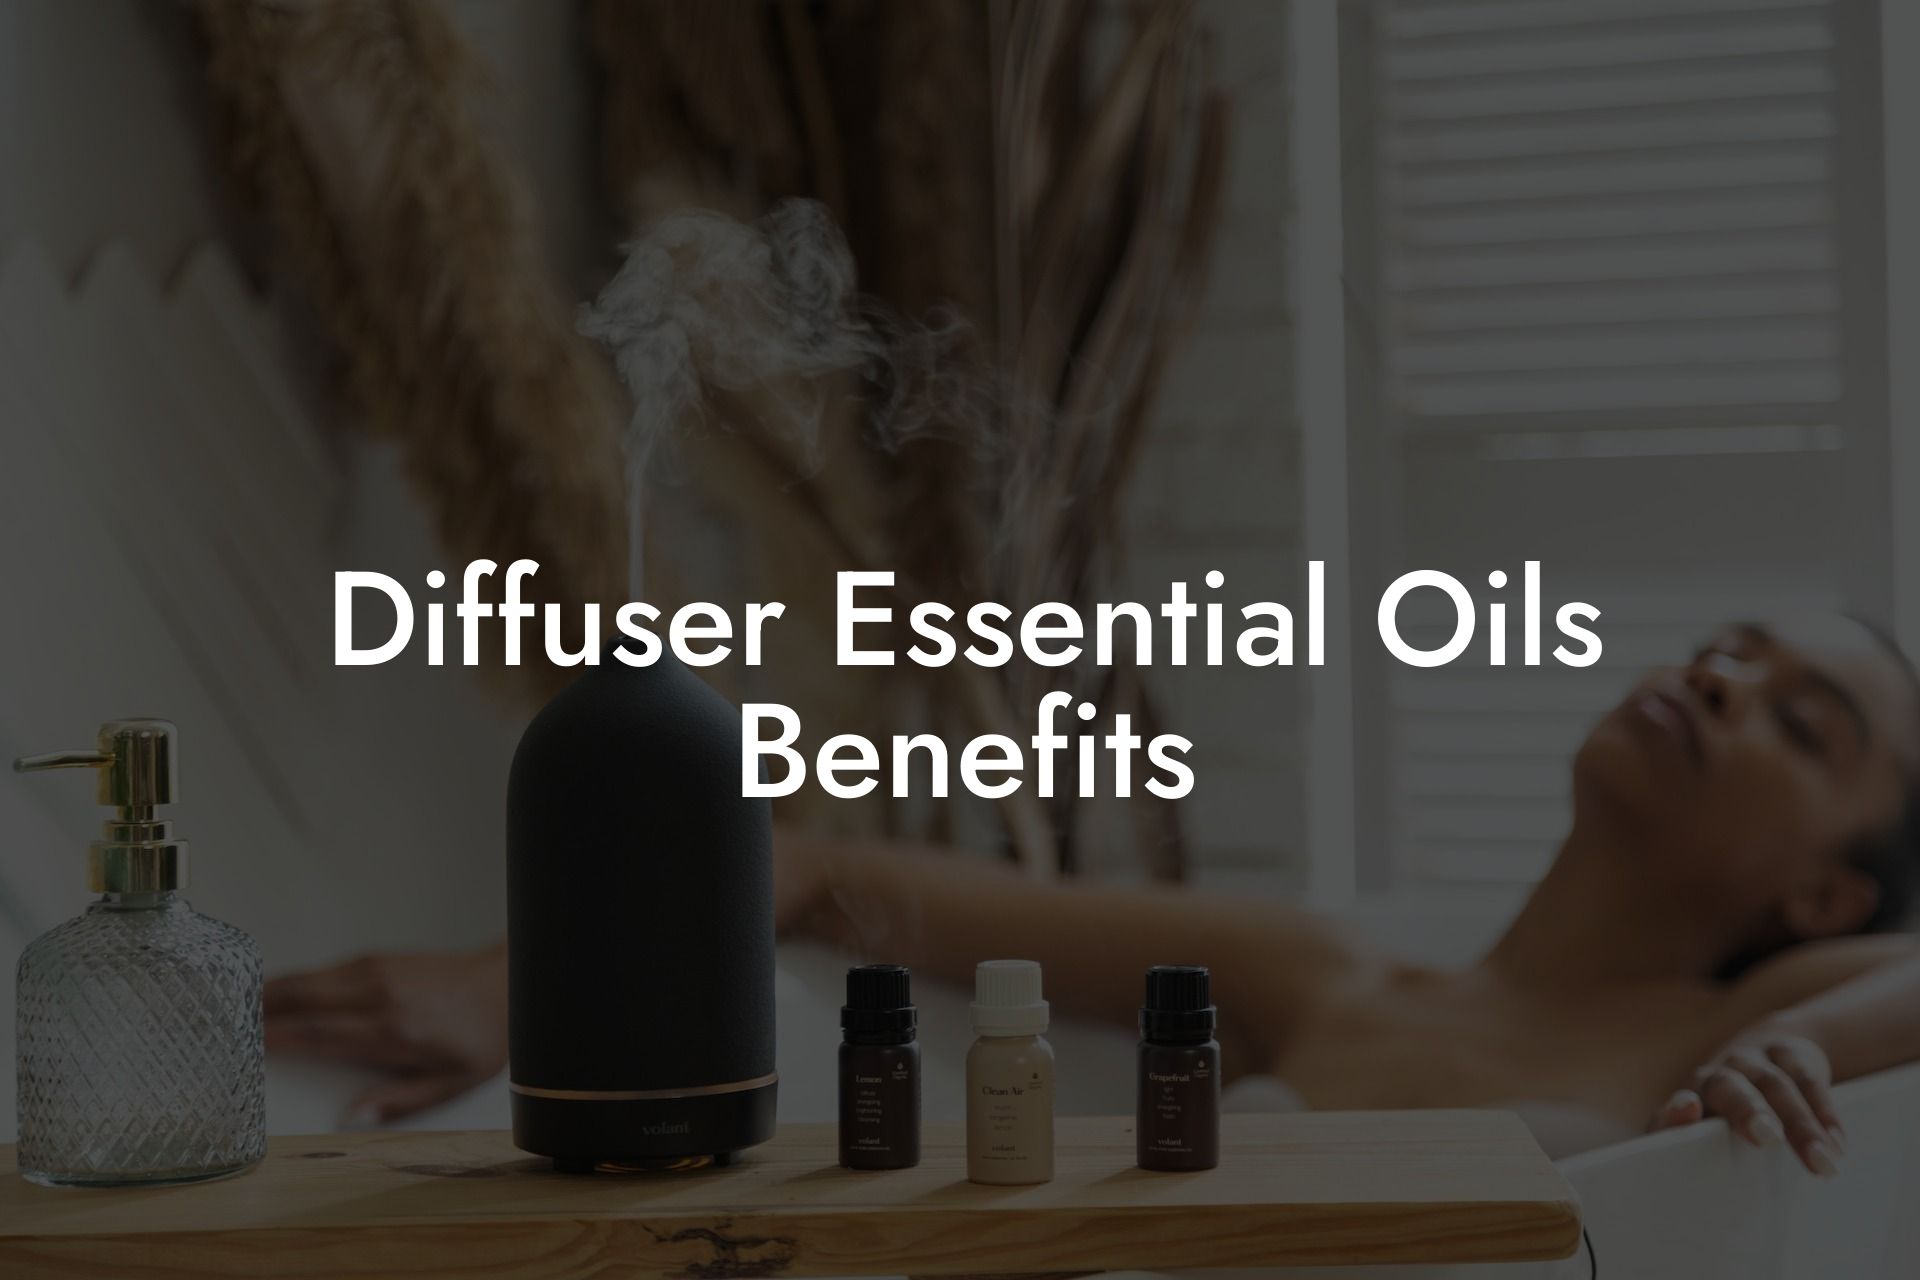 Diffuser Essential Oils Benefits